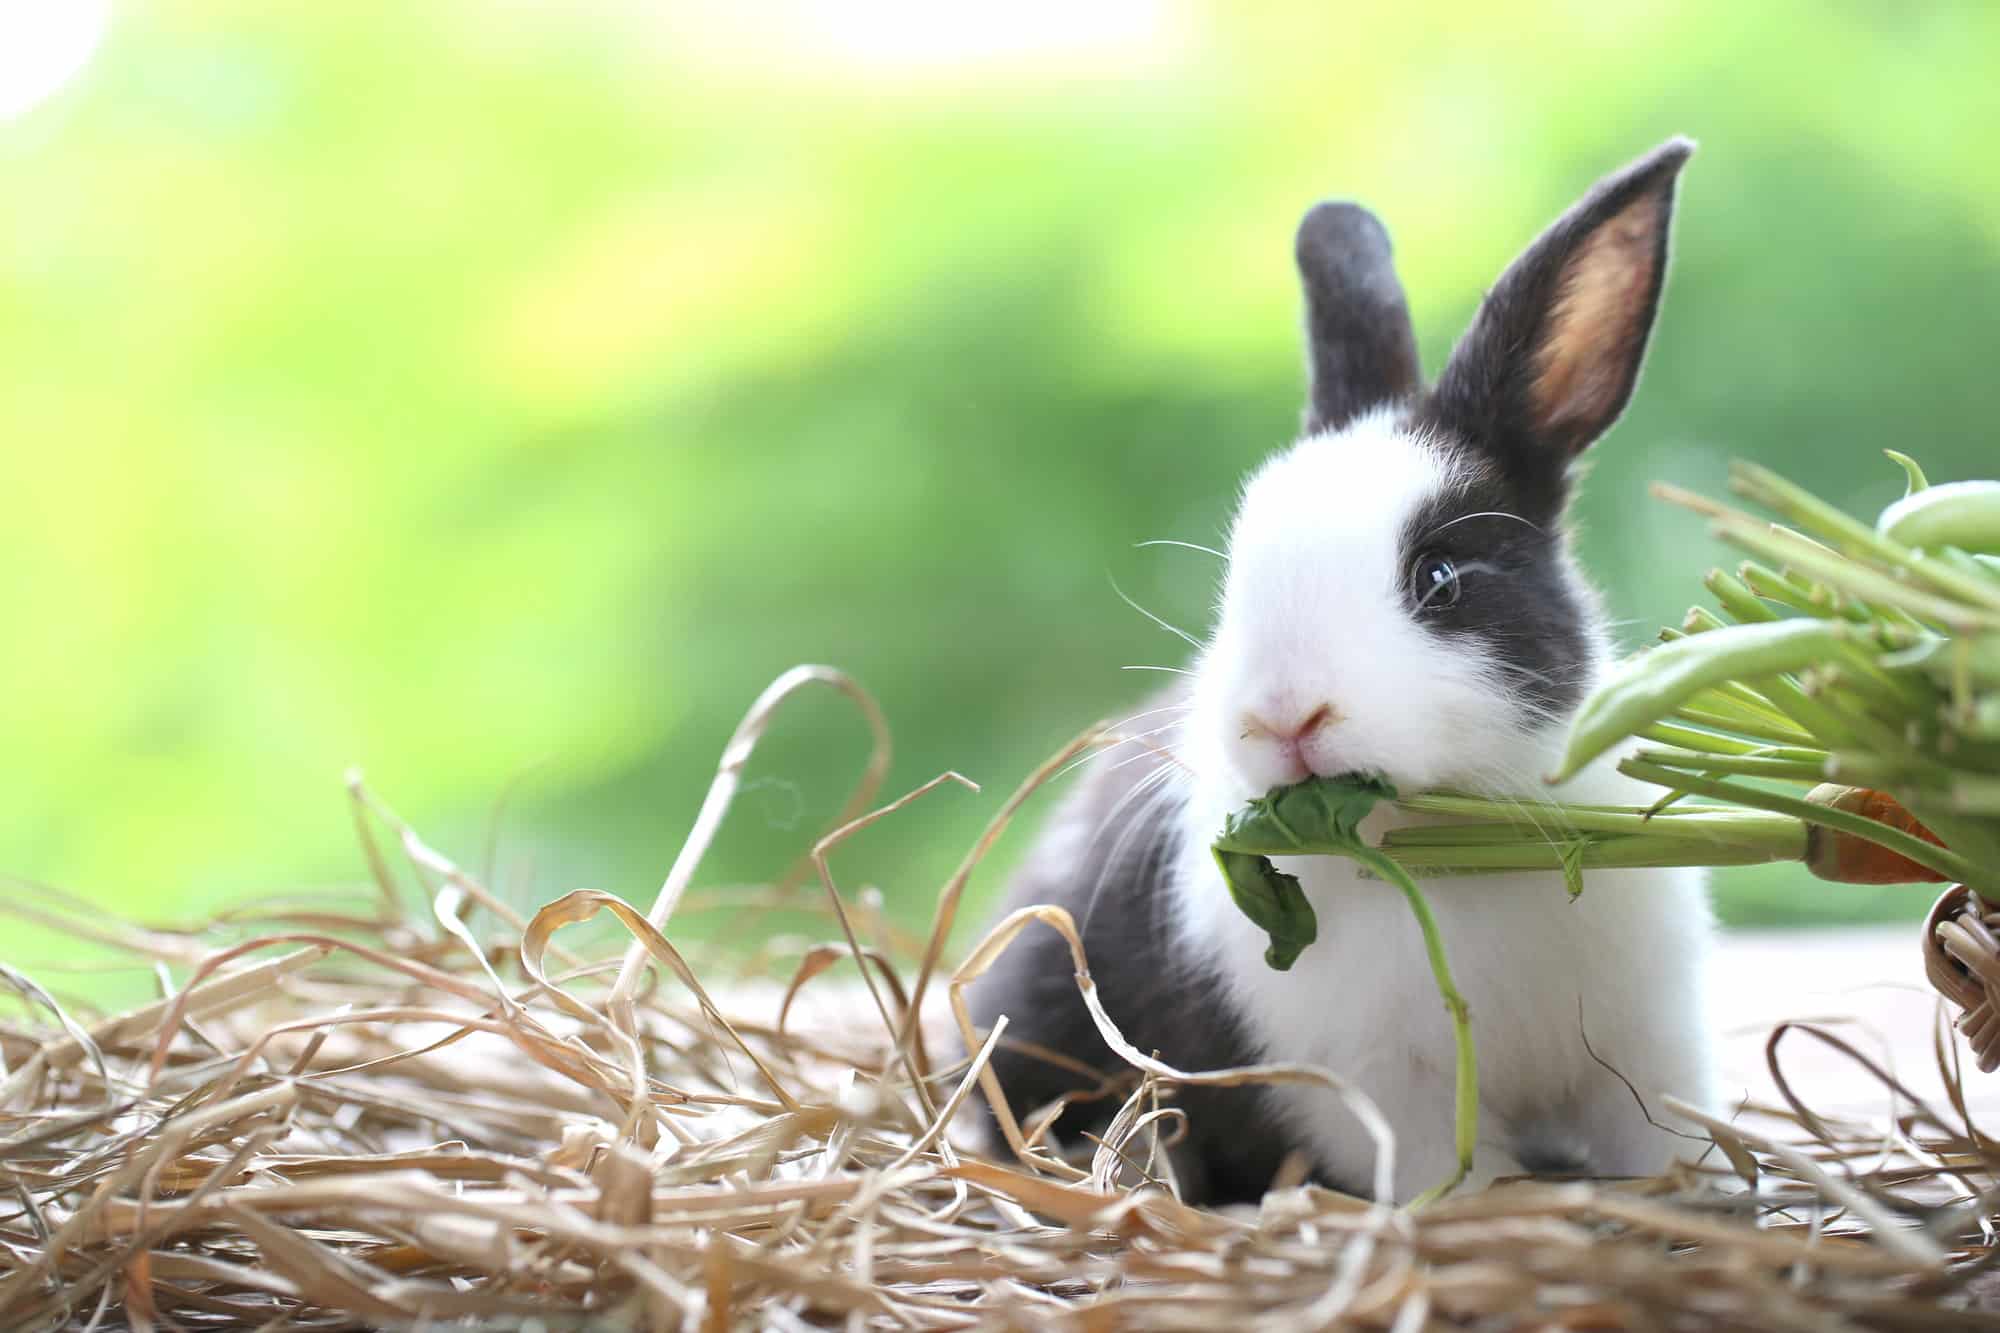 grey nd white rabbit eating grass.